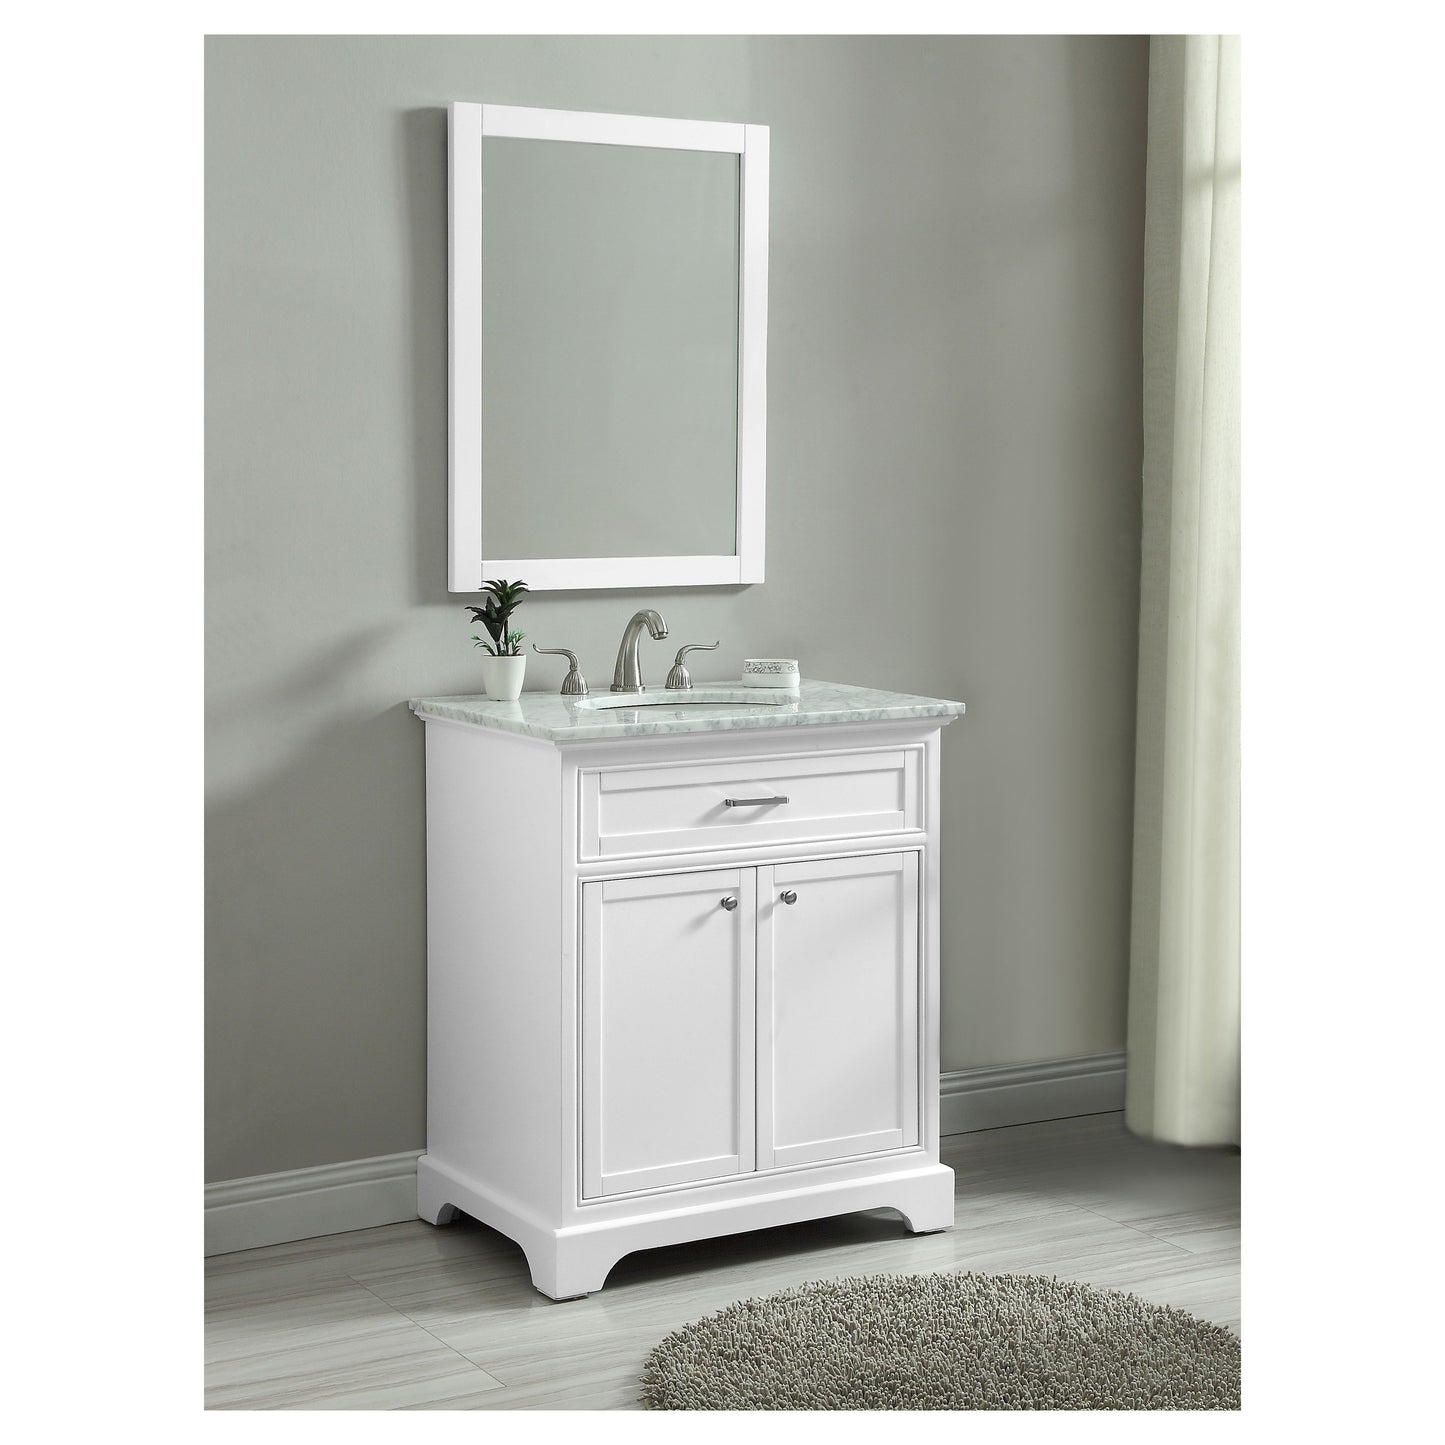 VF15030WH 30" Single Bathroom Vanity Set in White